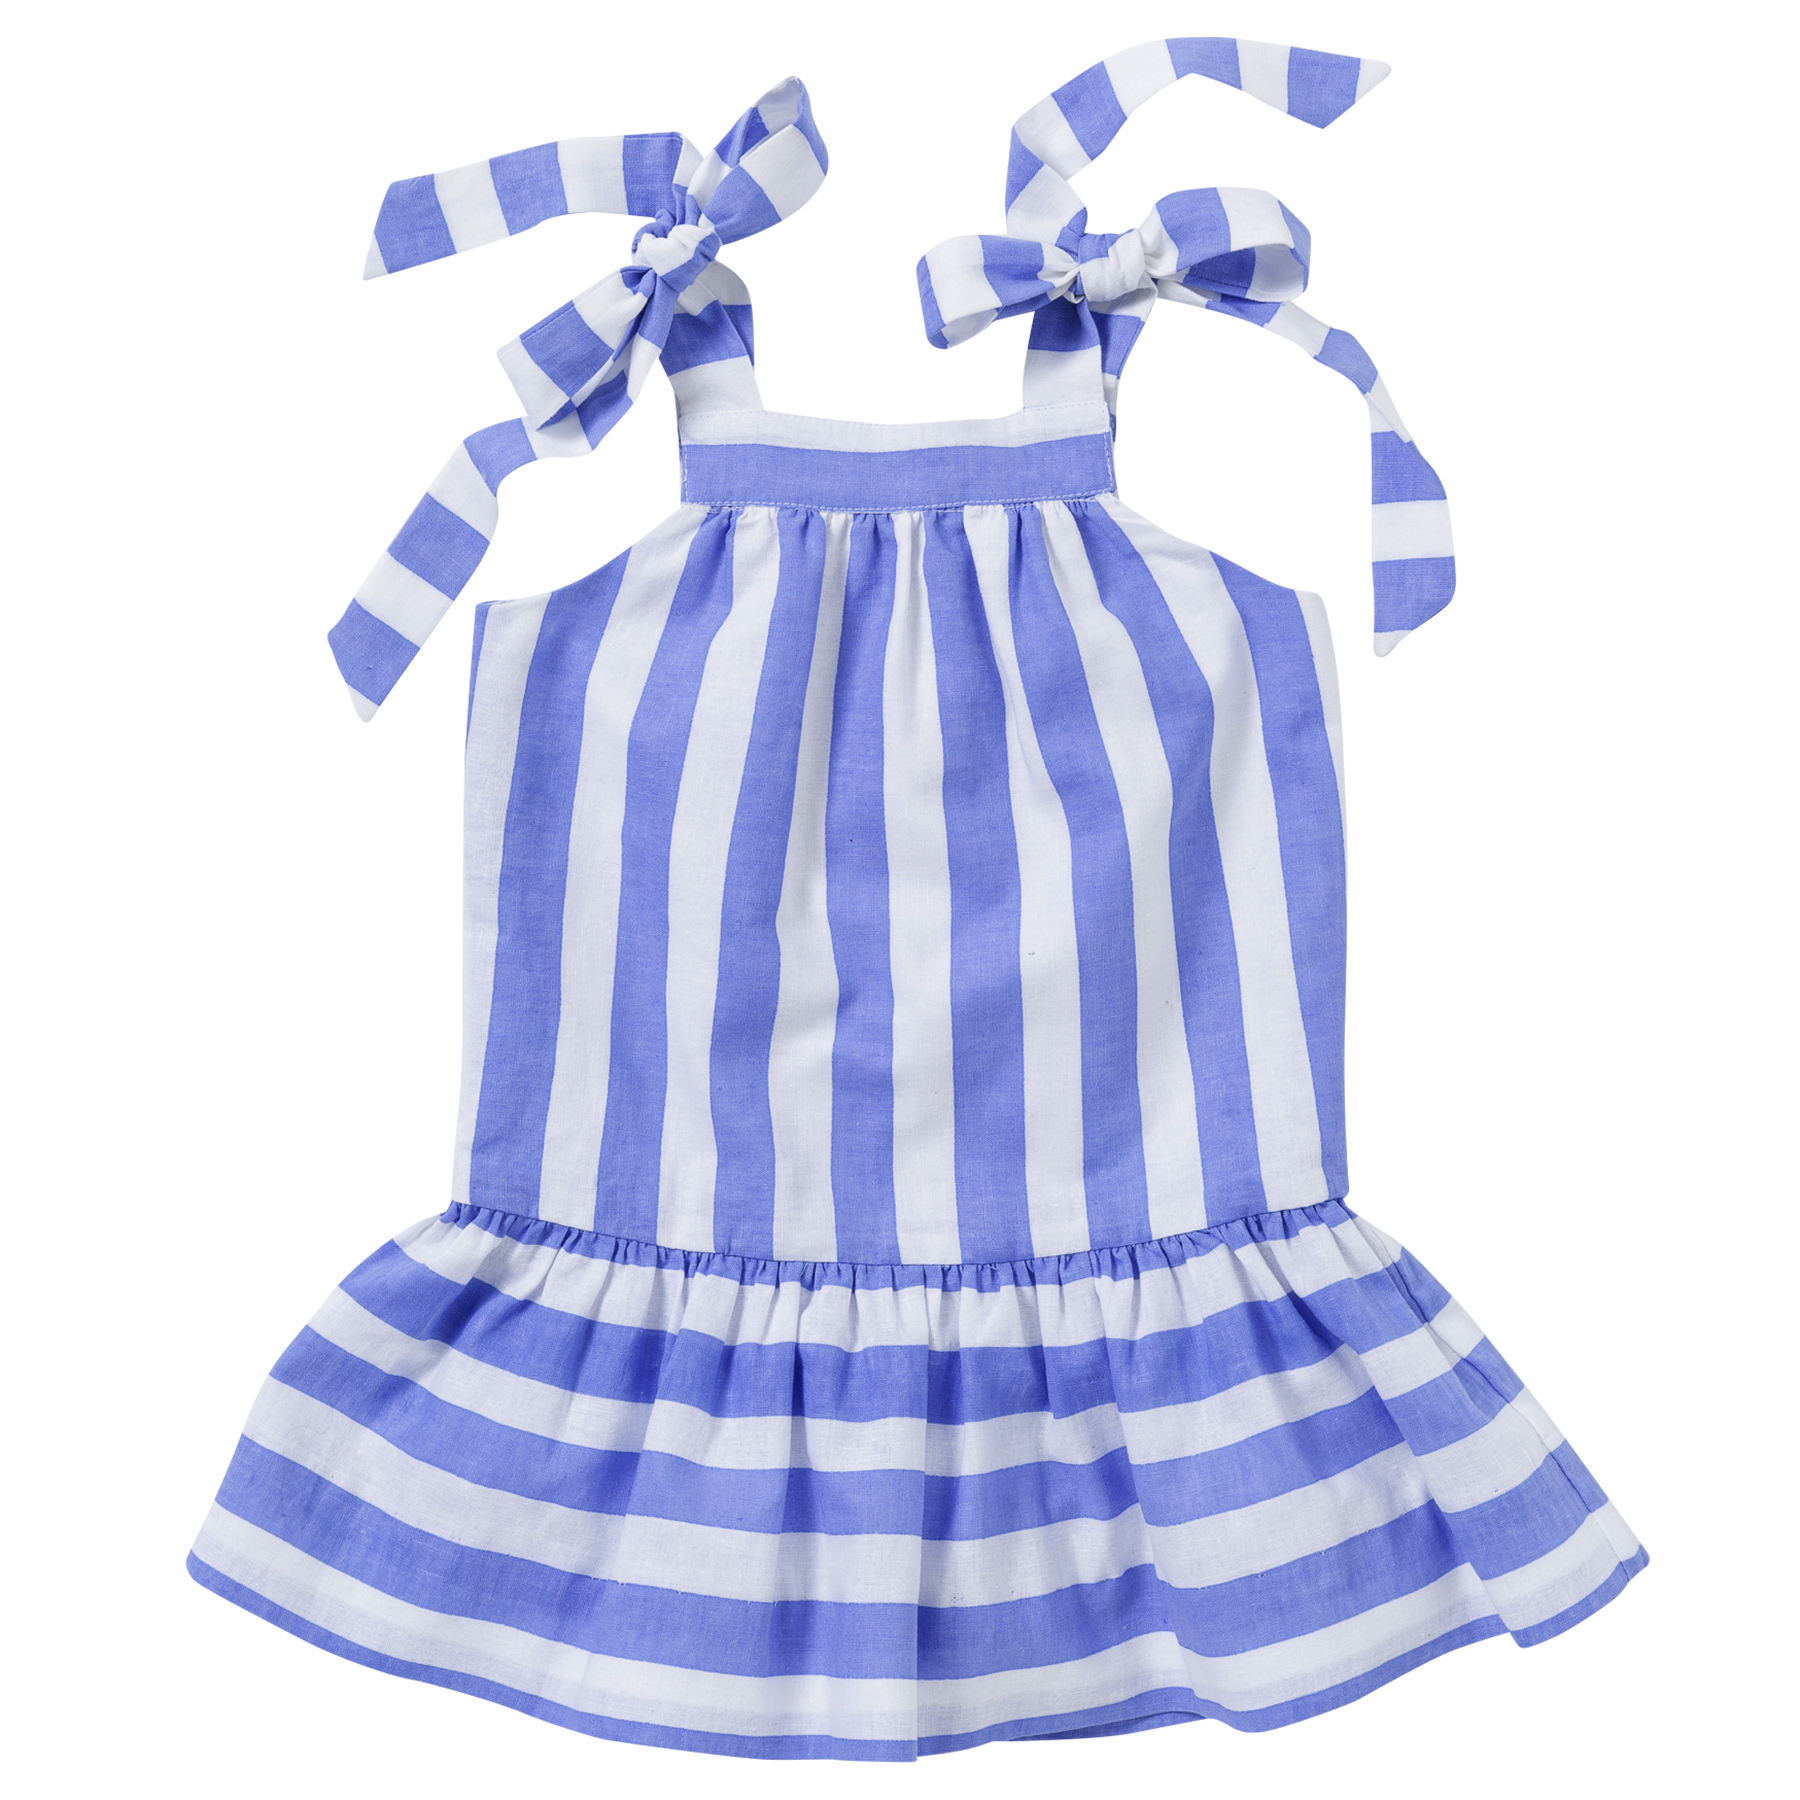 The Audrey Dress in Stripe